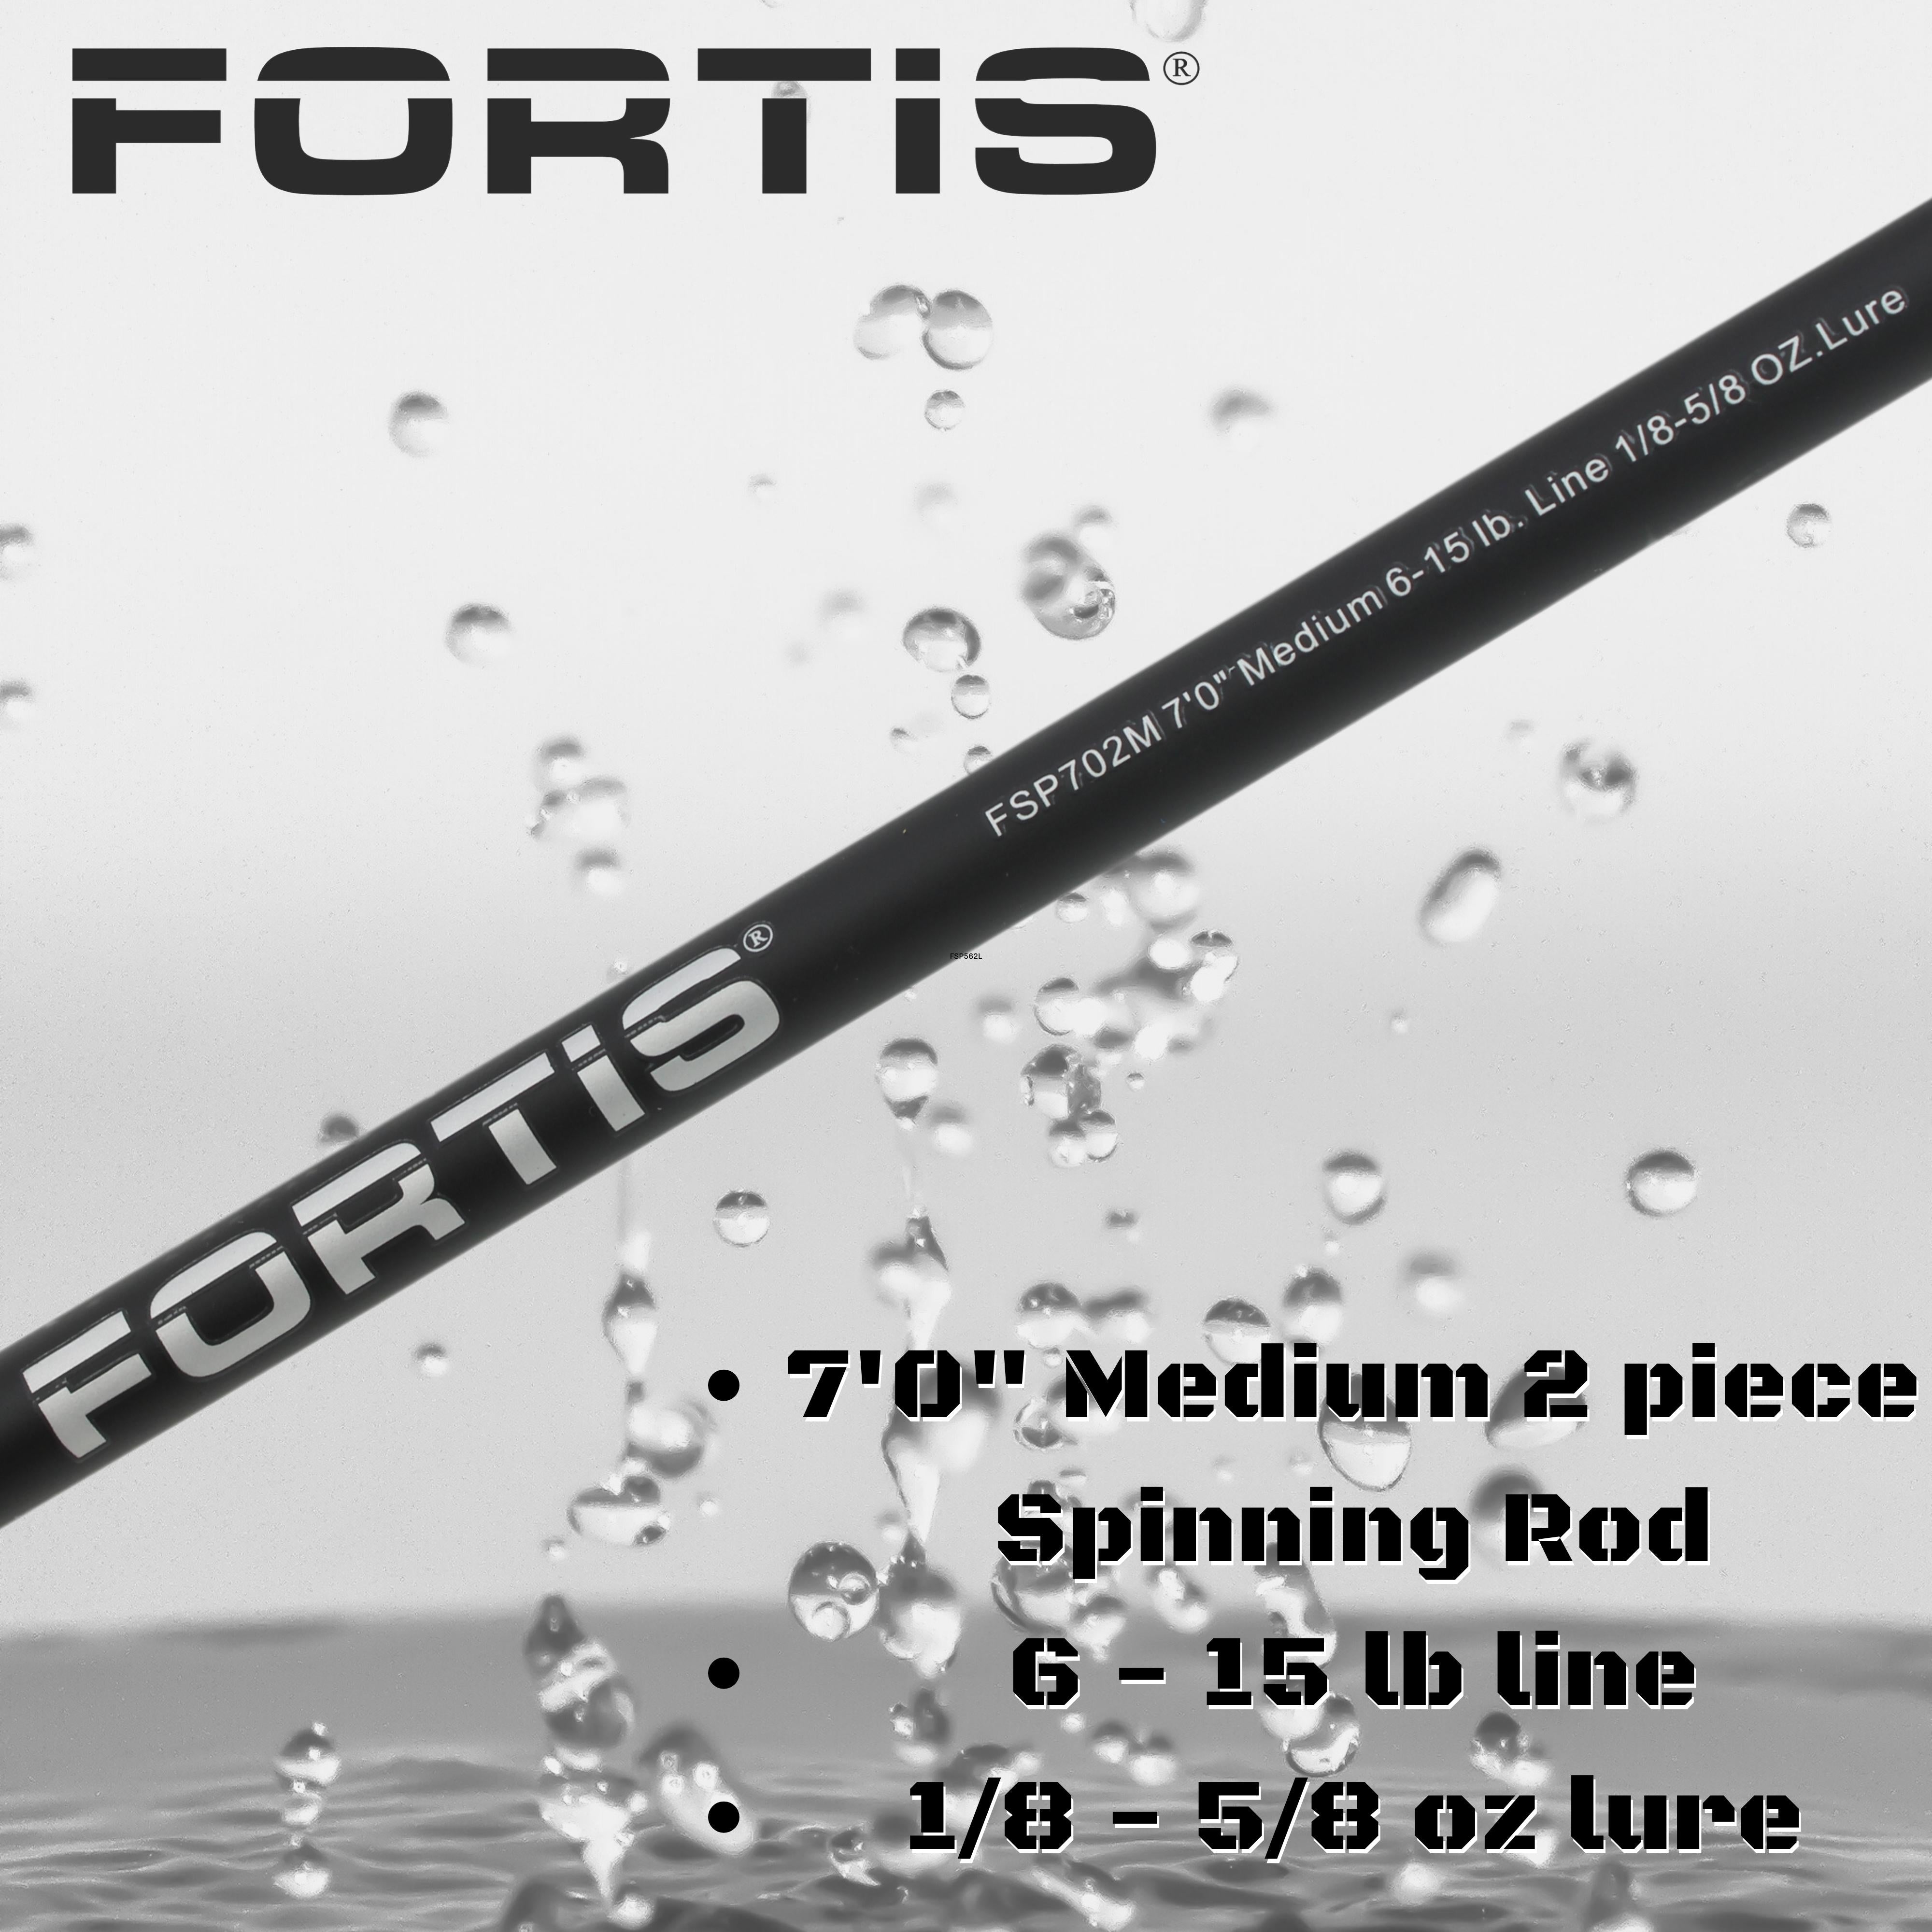 FORTIS 7' Medium Action 2 Piece Spinning Rod